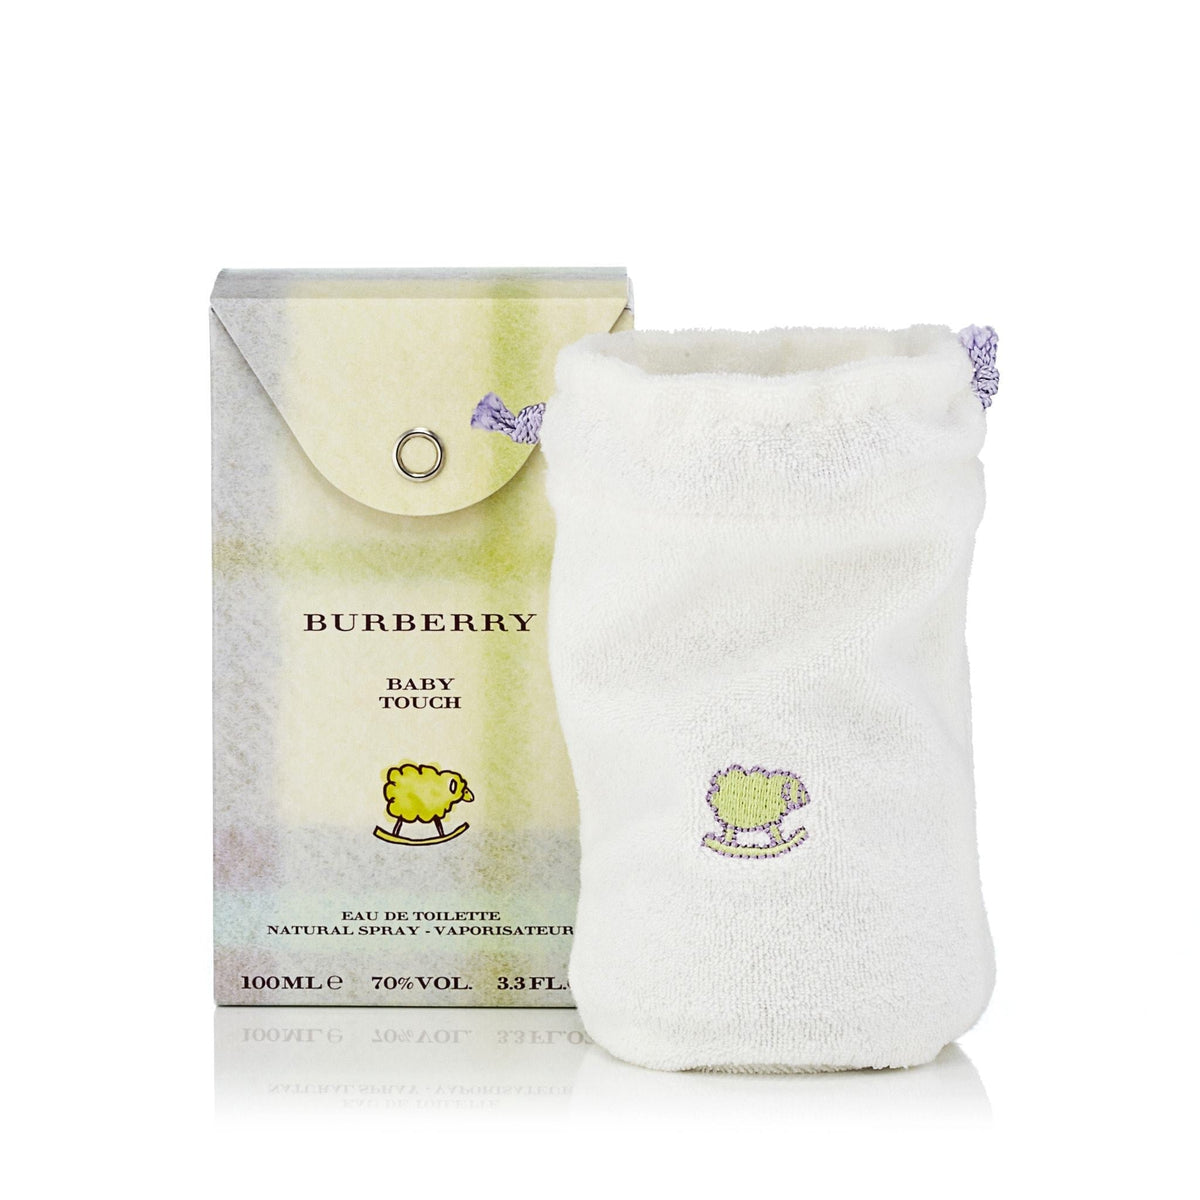 Baby Touch Eau de Toilette Spray for Women by Burberry 3.3 oz.